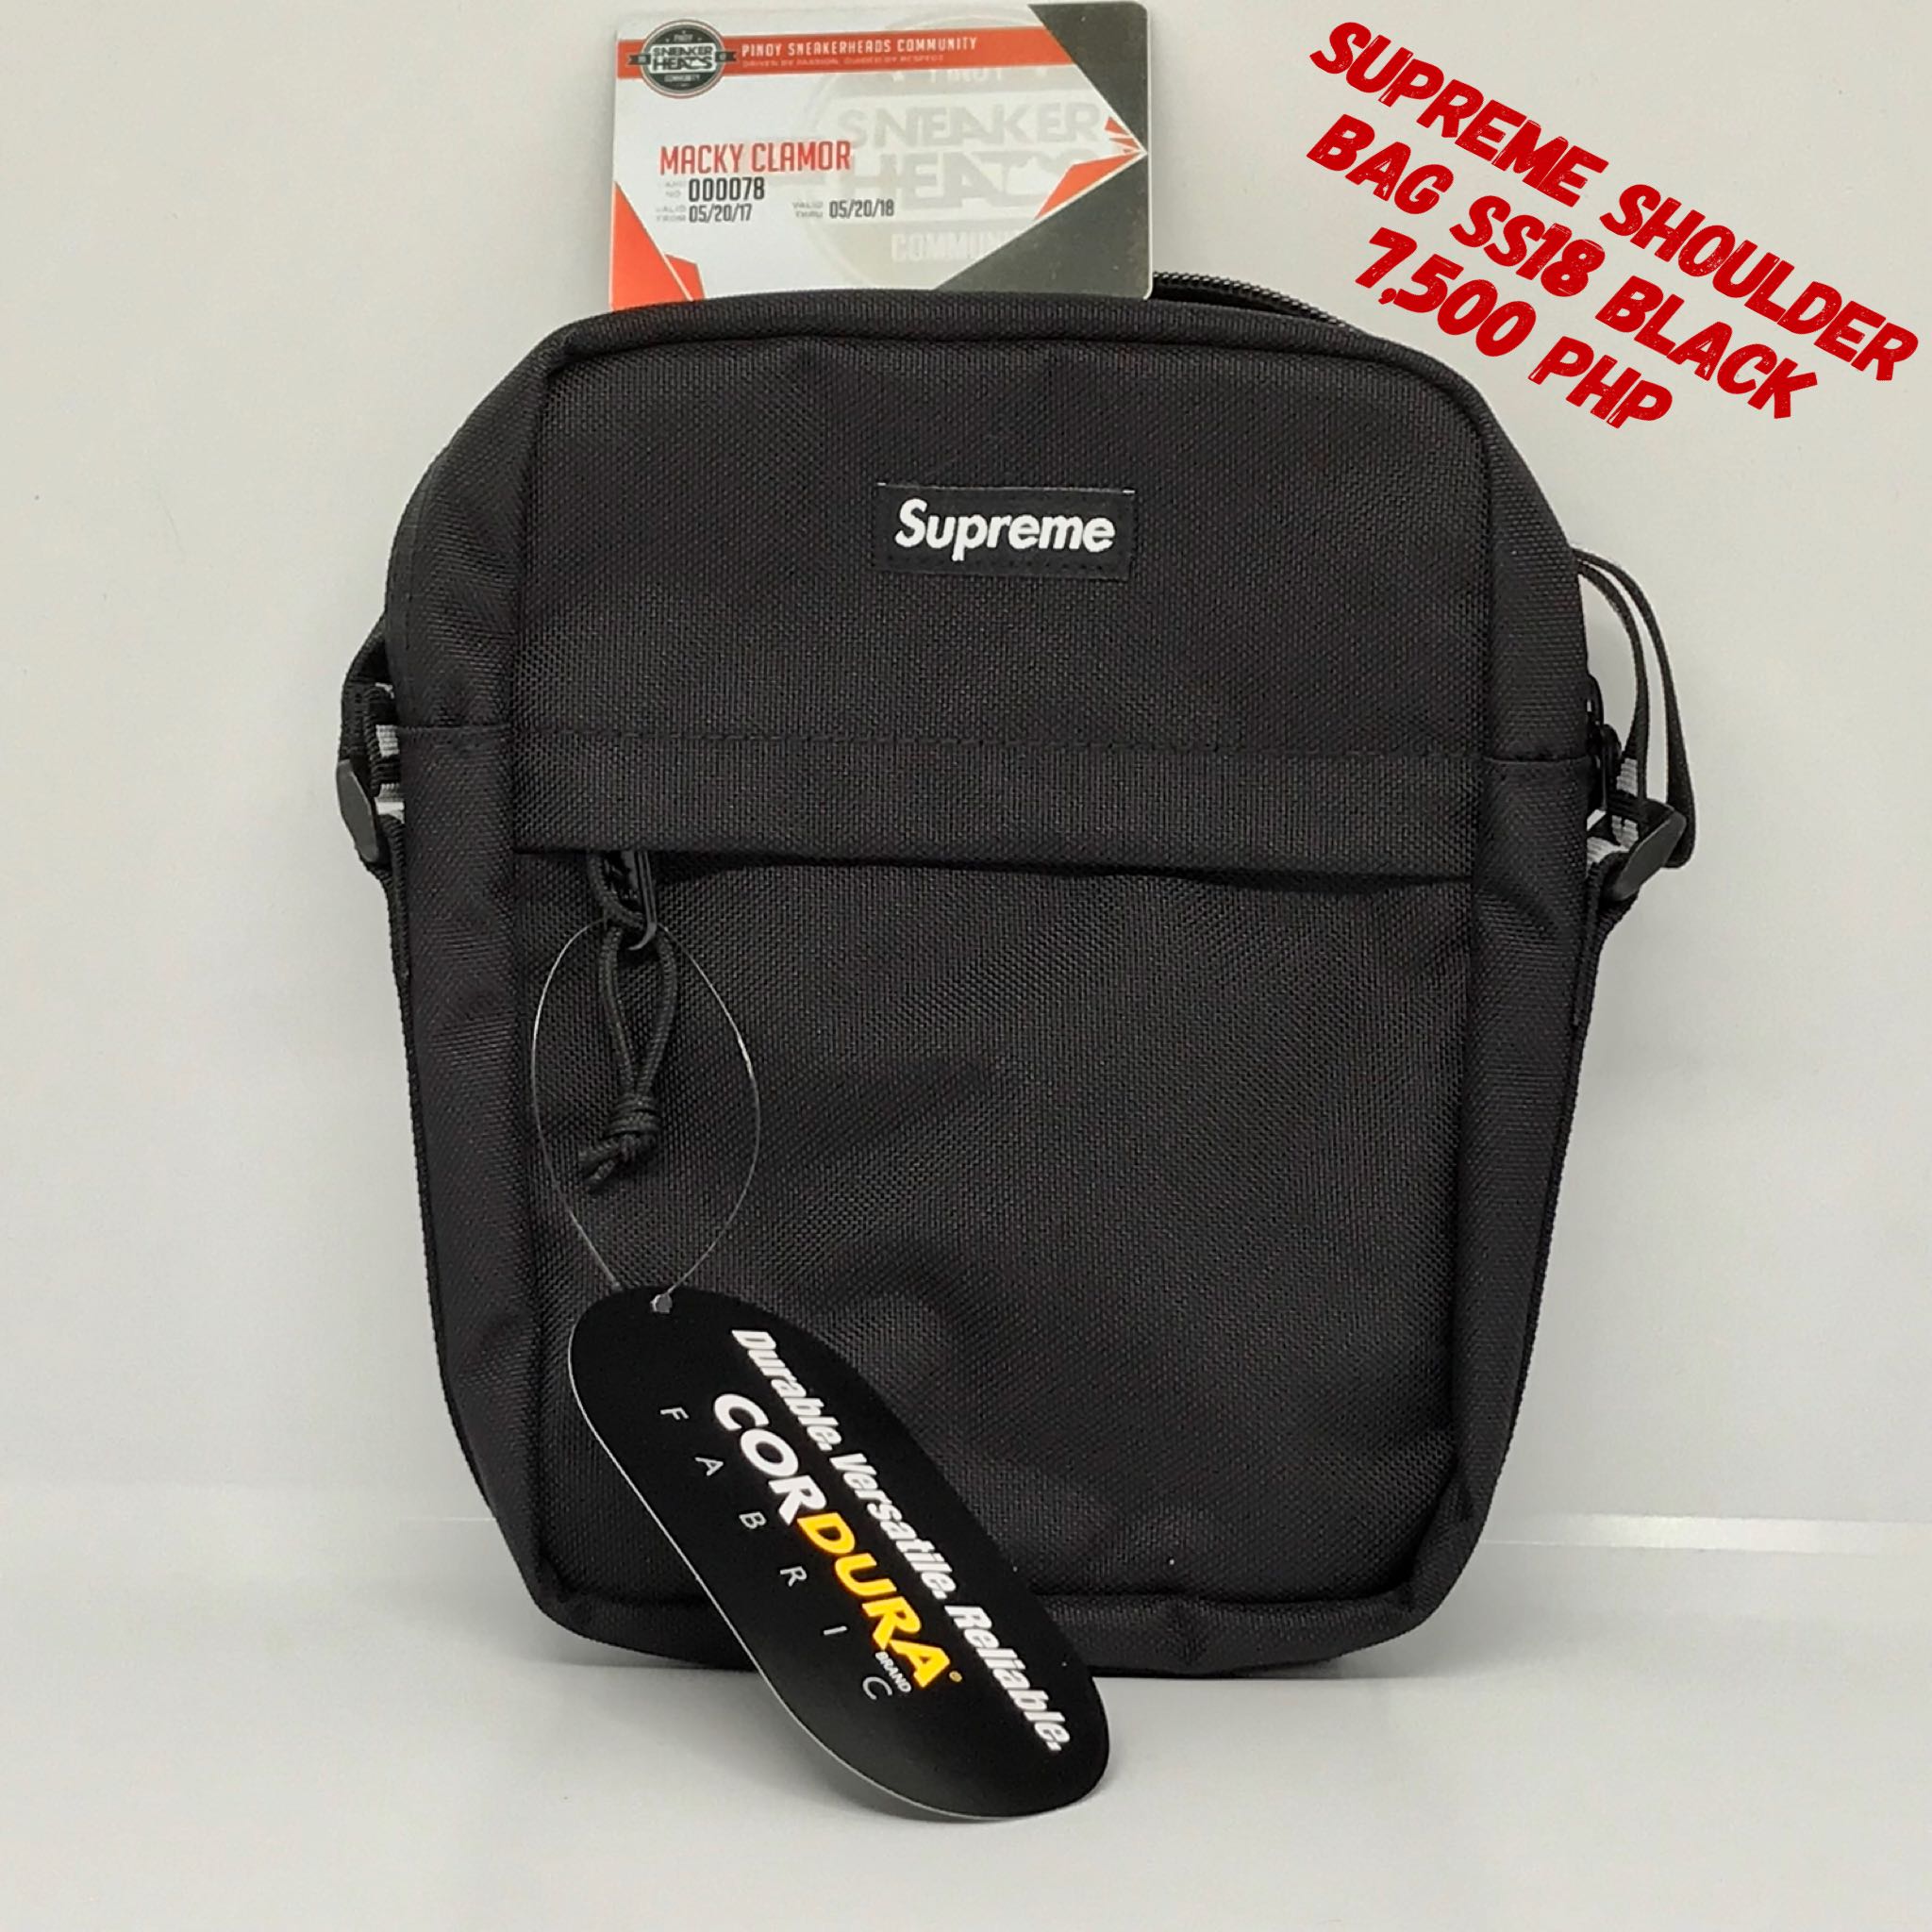 Supreme Shoulder bag SS20 DSWT 100% authentic red